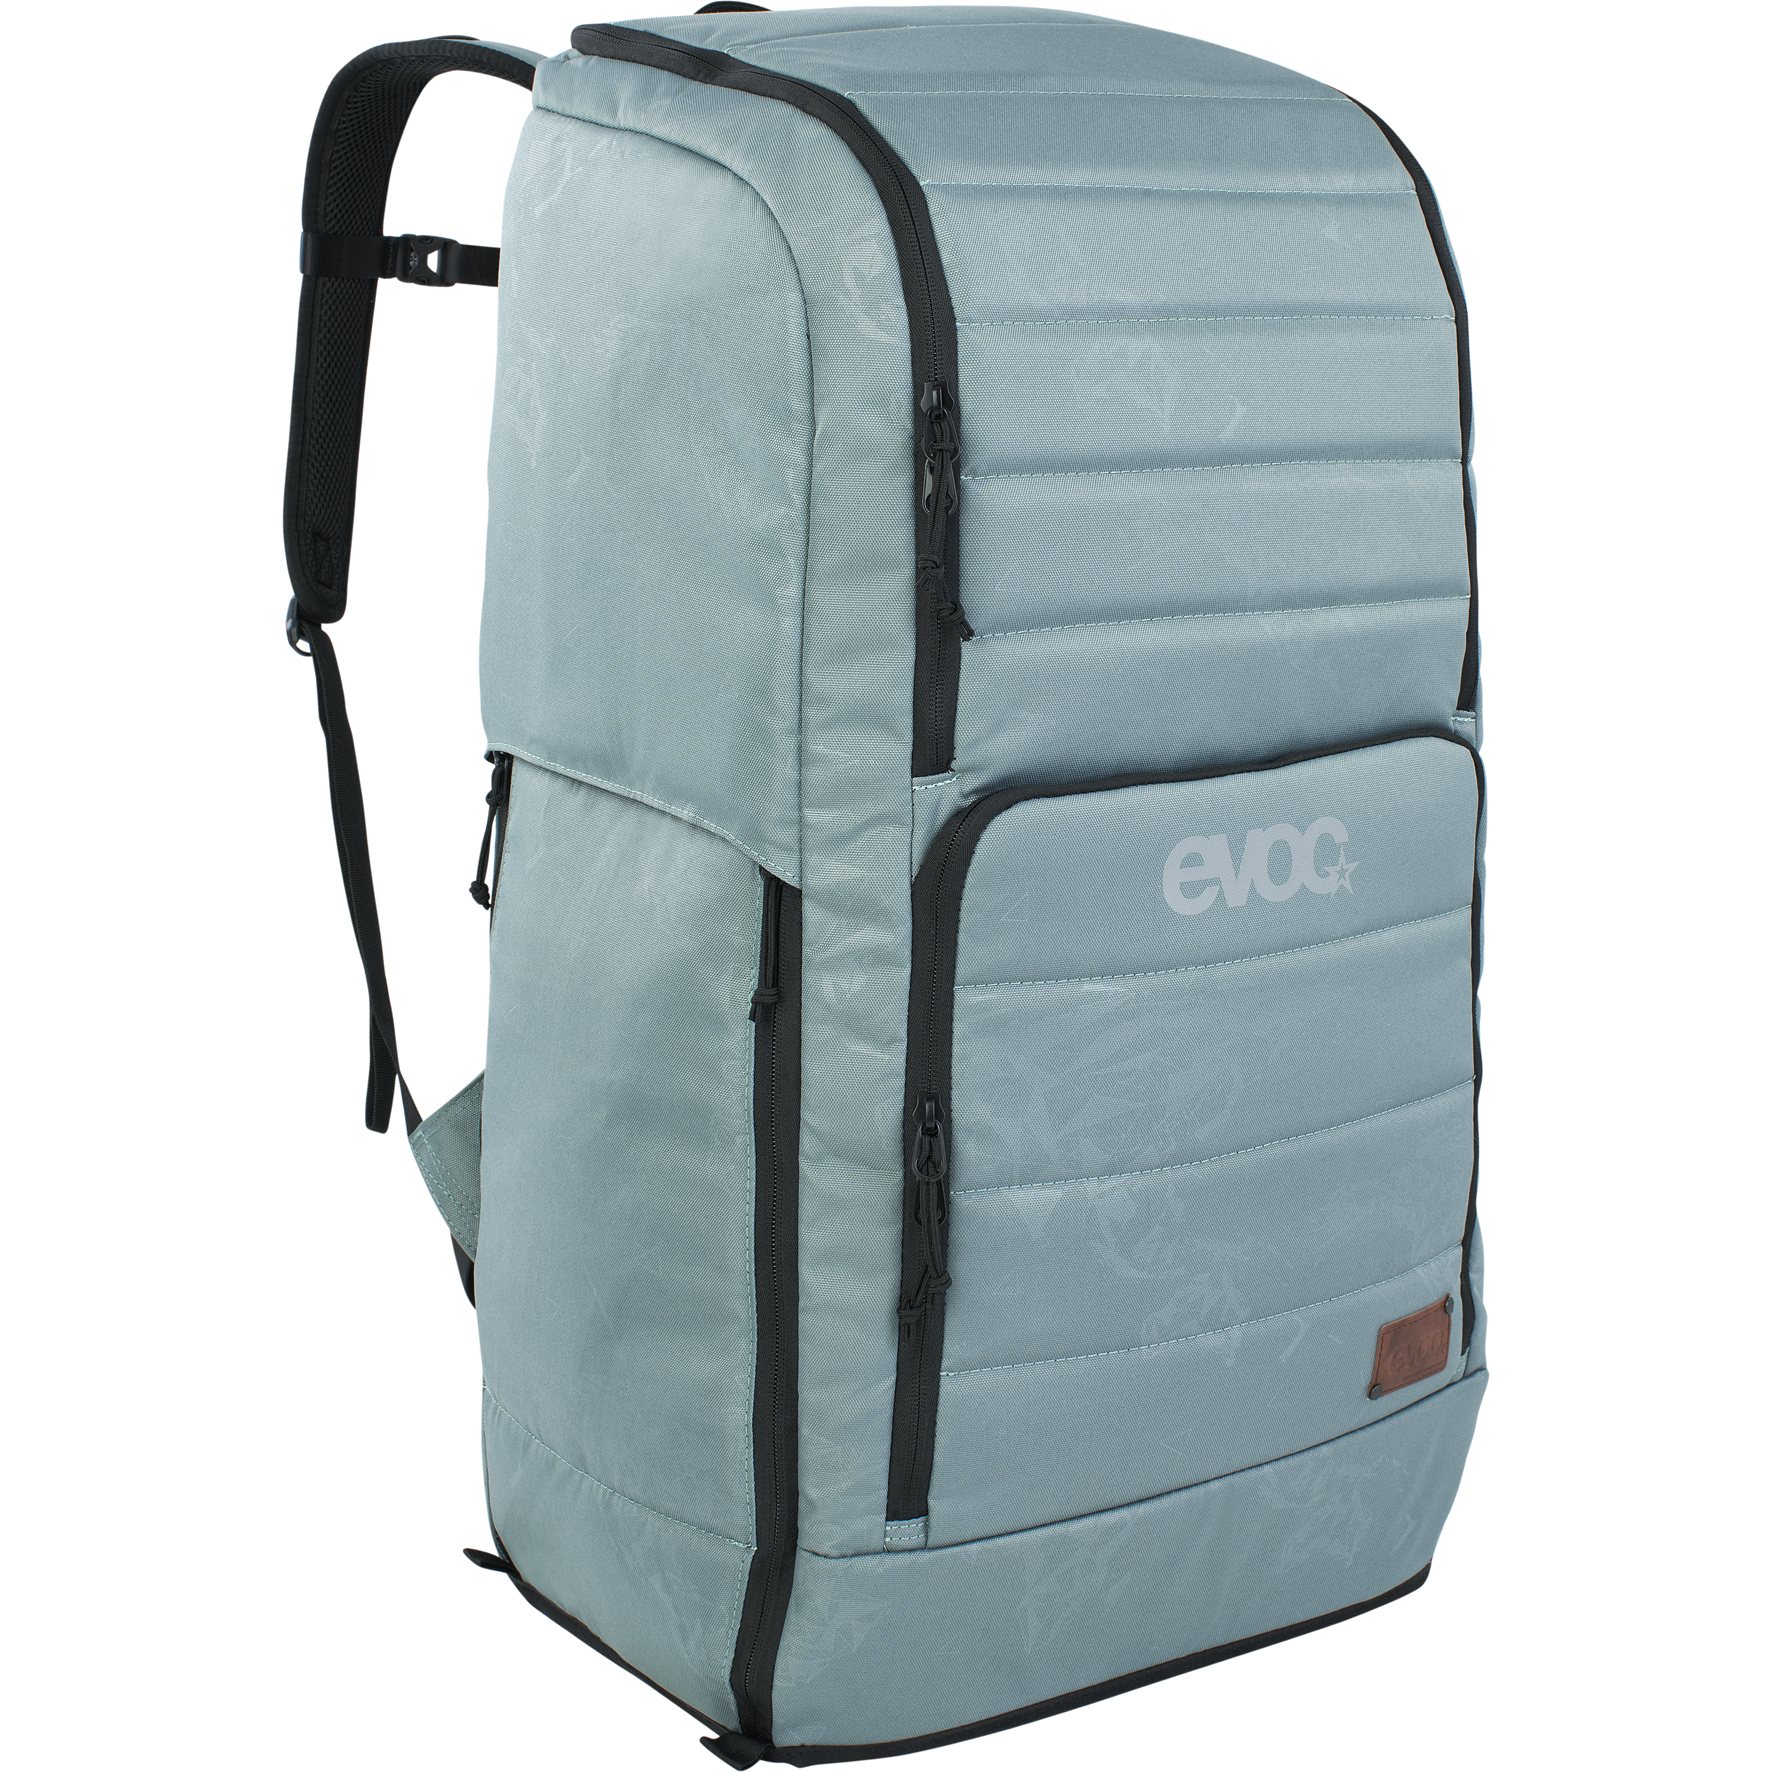 Productfoto van EVOC Gear Backpack 90L - Steel